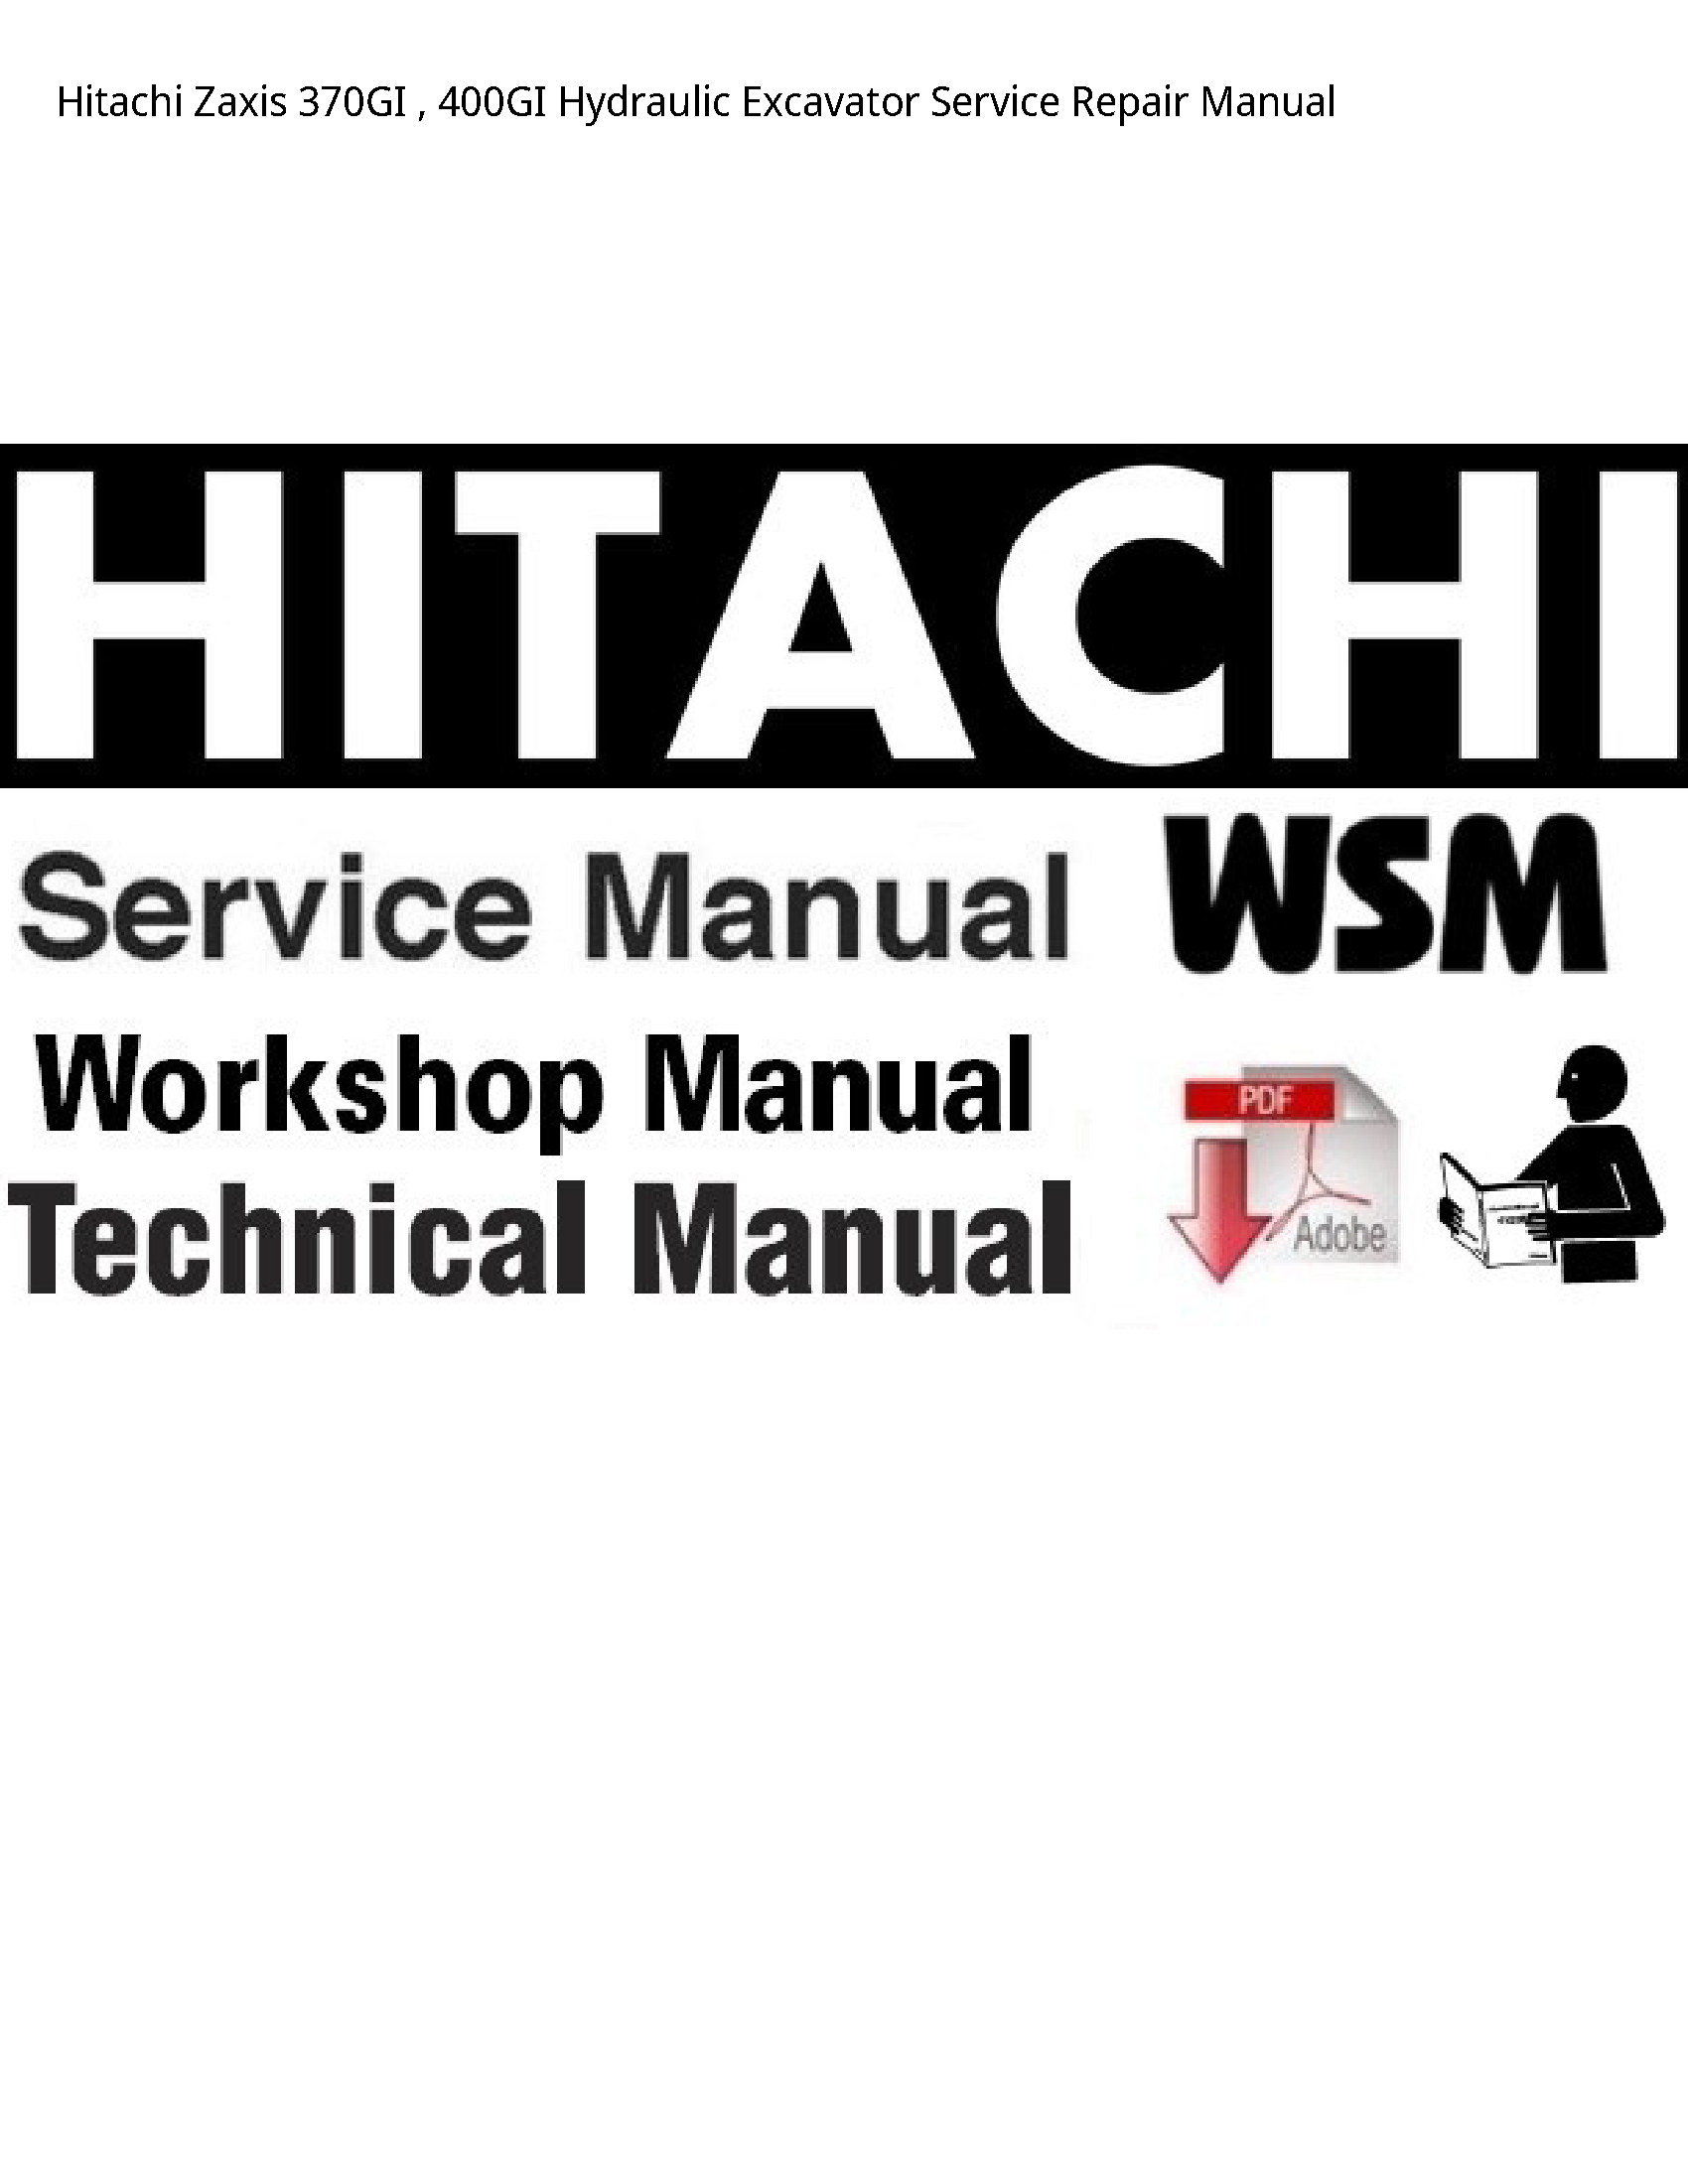 Hitachi 370GI Zaxis Hydraulic Excavator manual